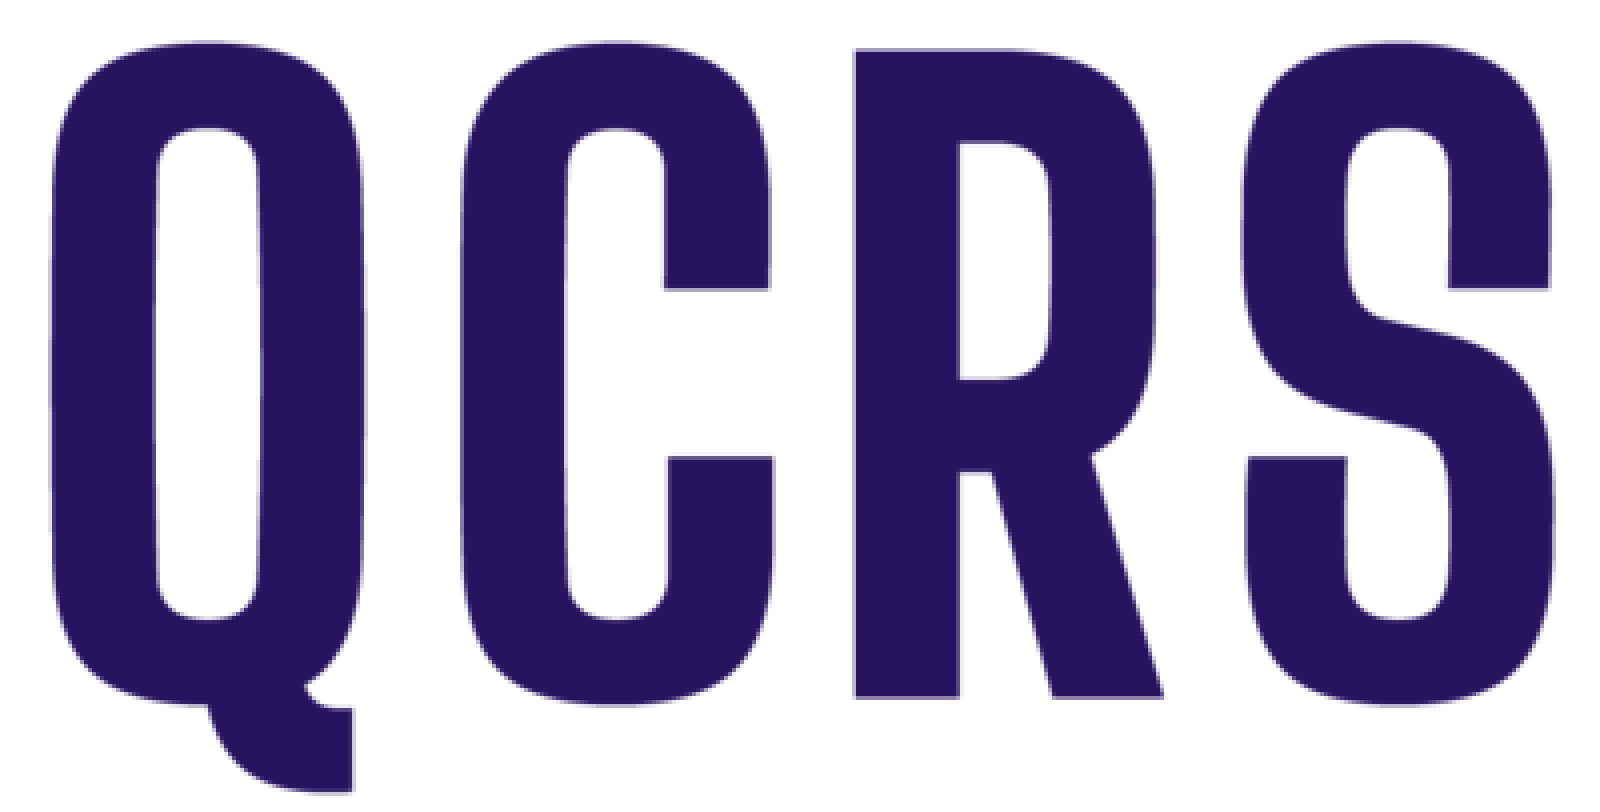 QCRS logo